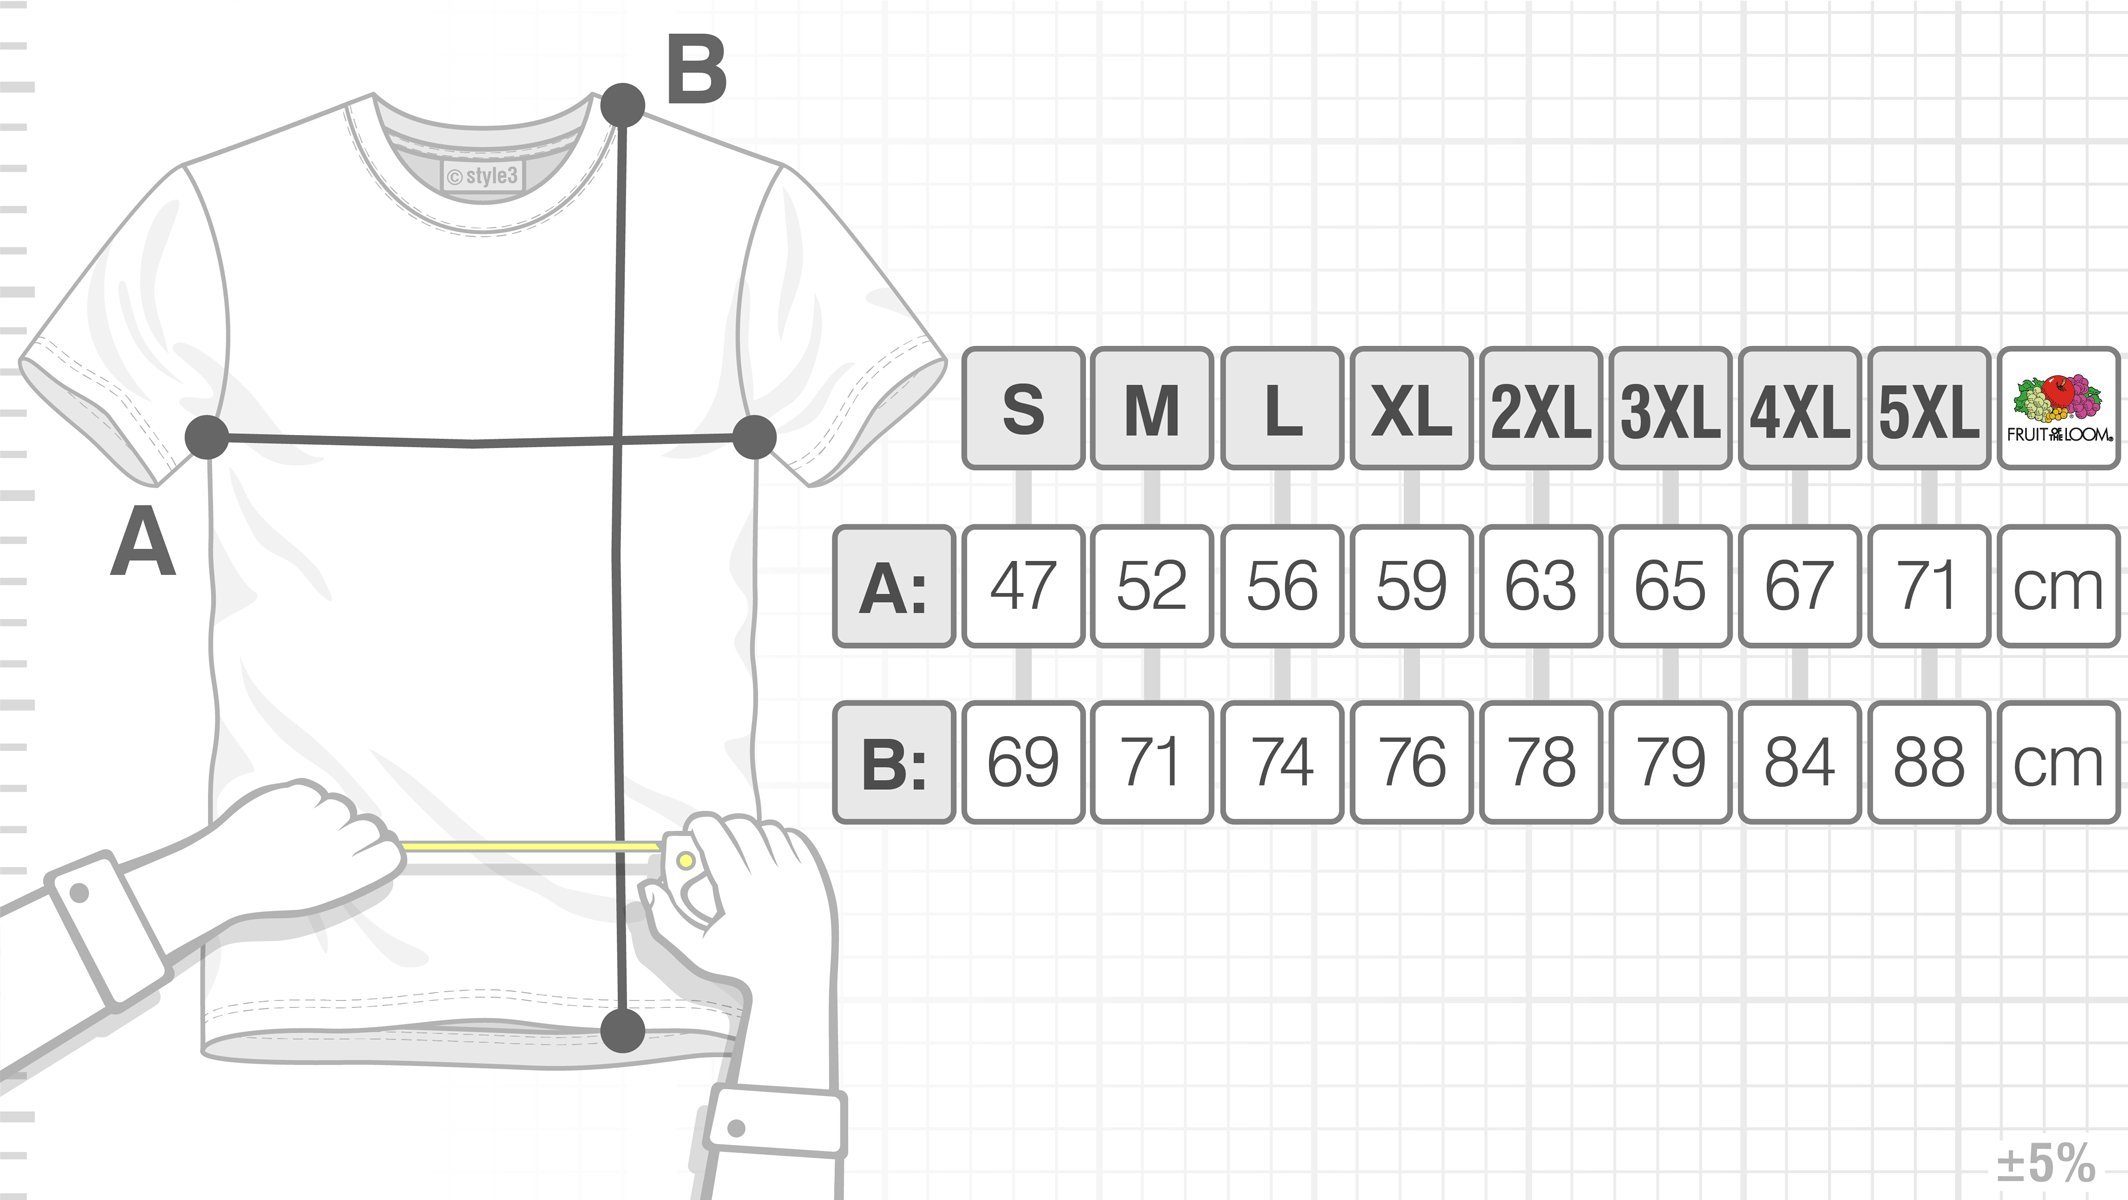 instinkt Herren style3 intuition game poeball Print-Shirt Instinct poke T-Shirt Team boy gelb arena